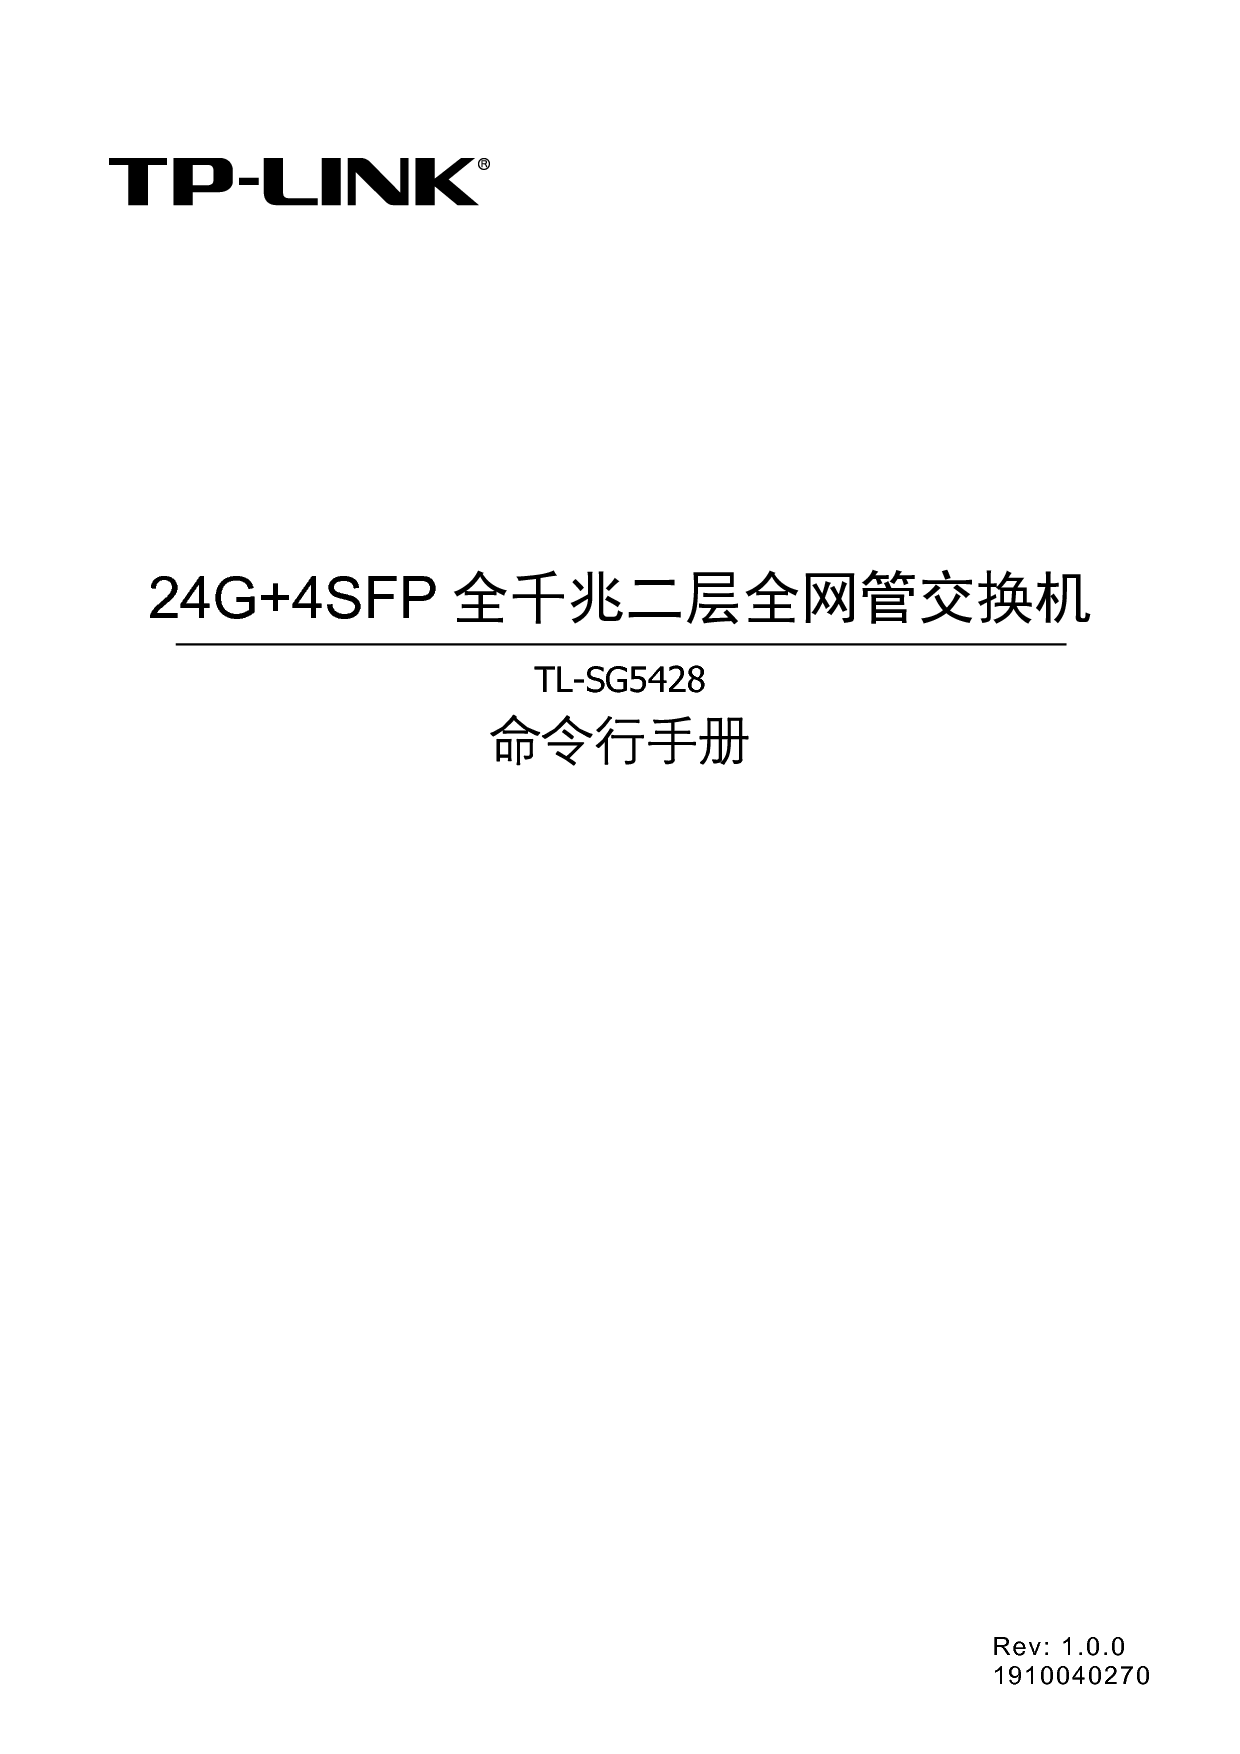 普联 TP-Link TL-SG5428 命令行 用户手册 封面